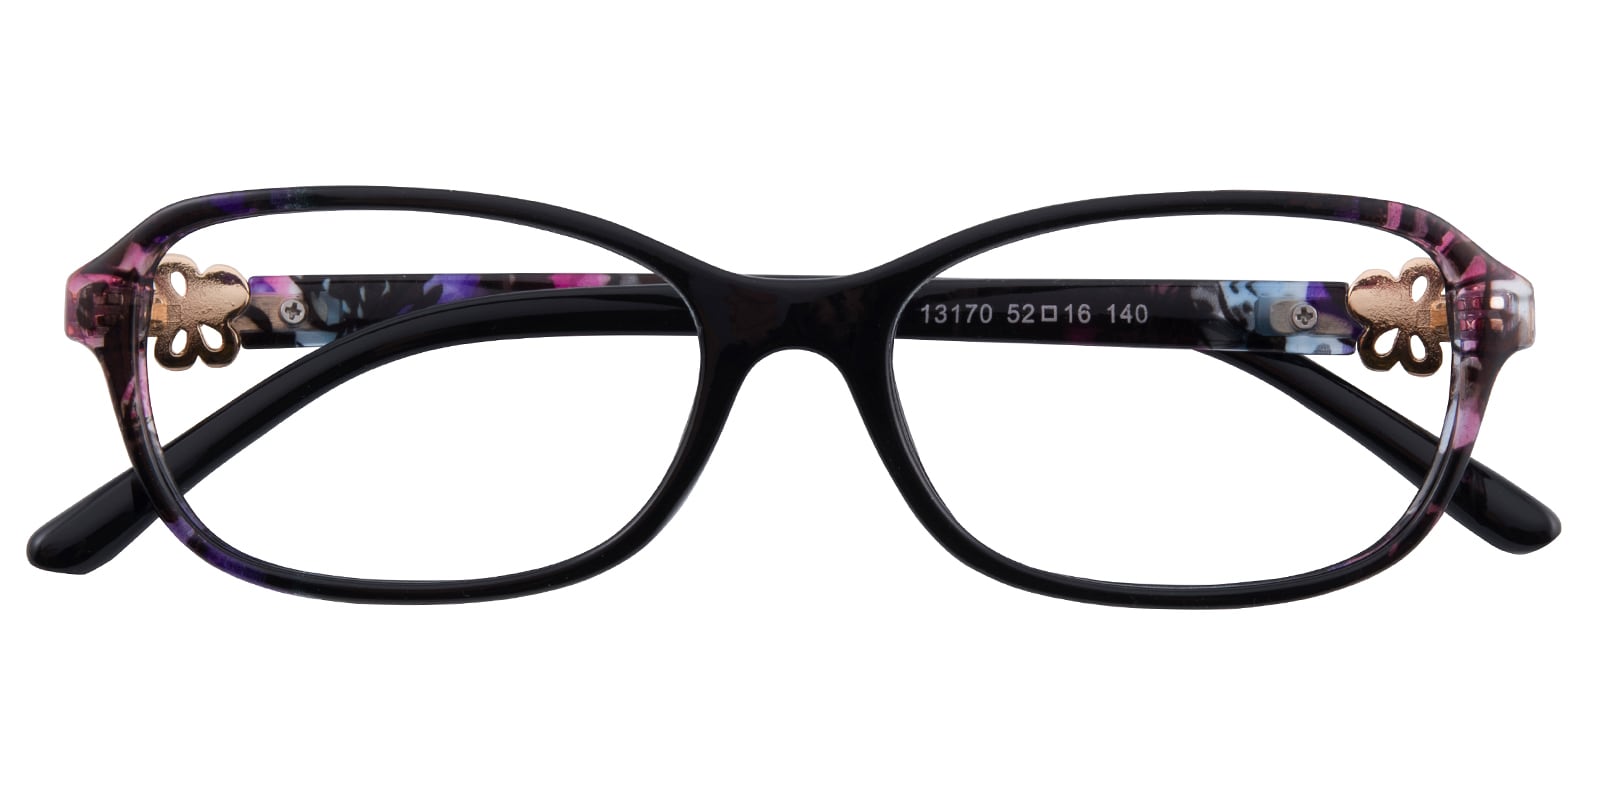 Oval Eyeglasses, Full Frame Black/Floral Plastic - FP2455